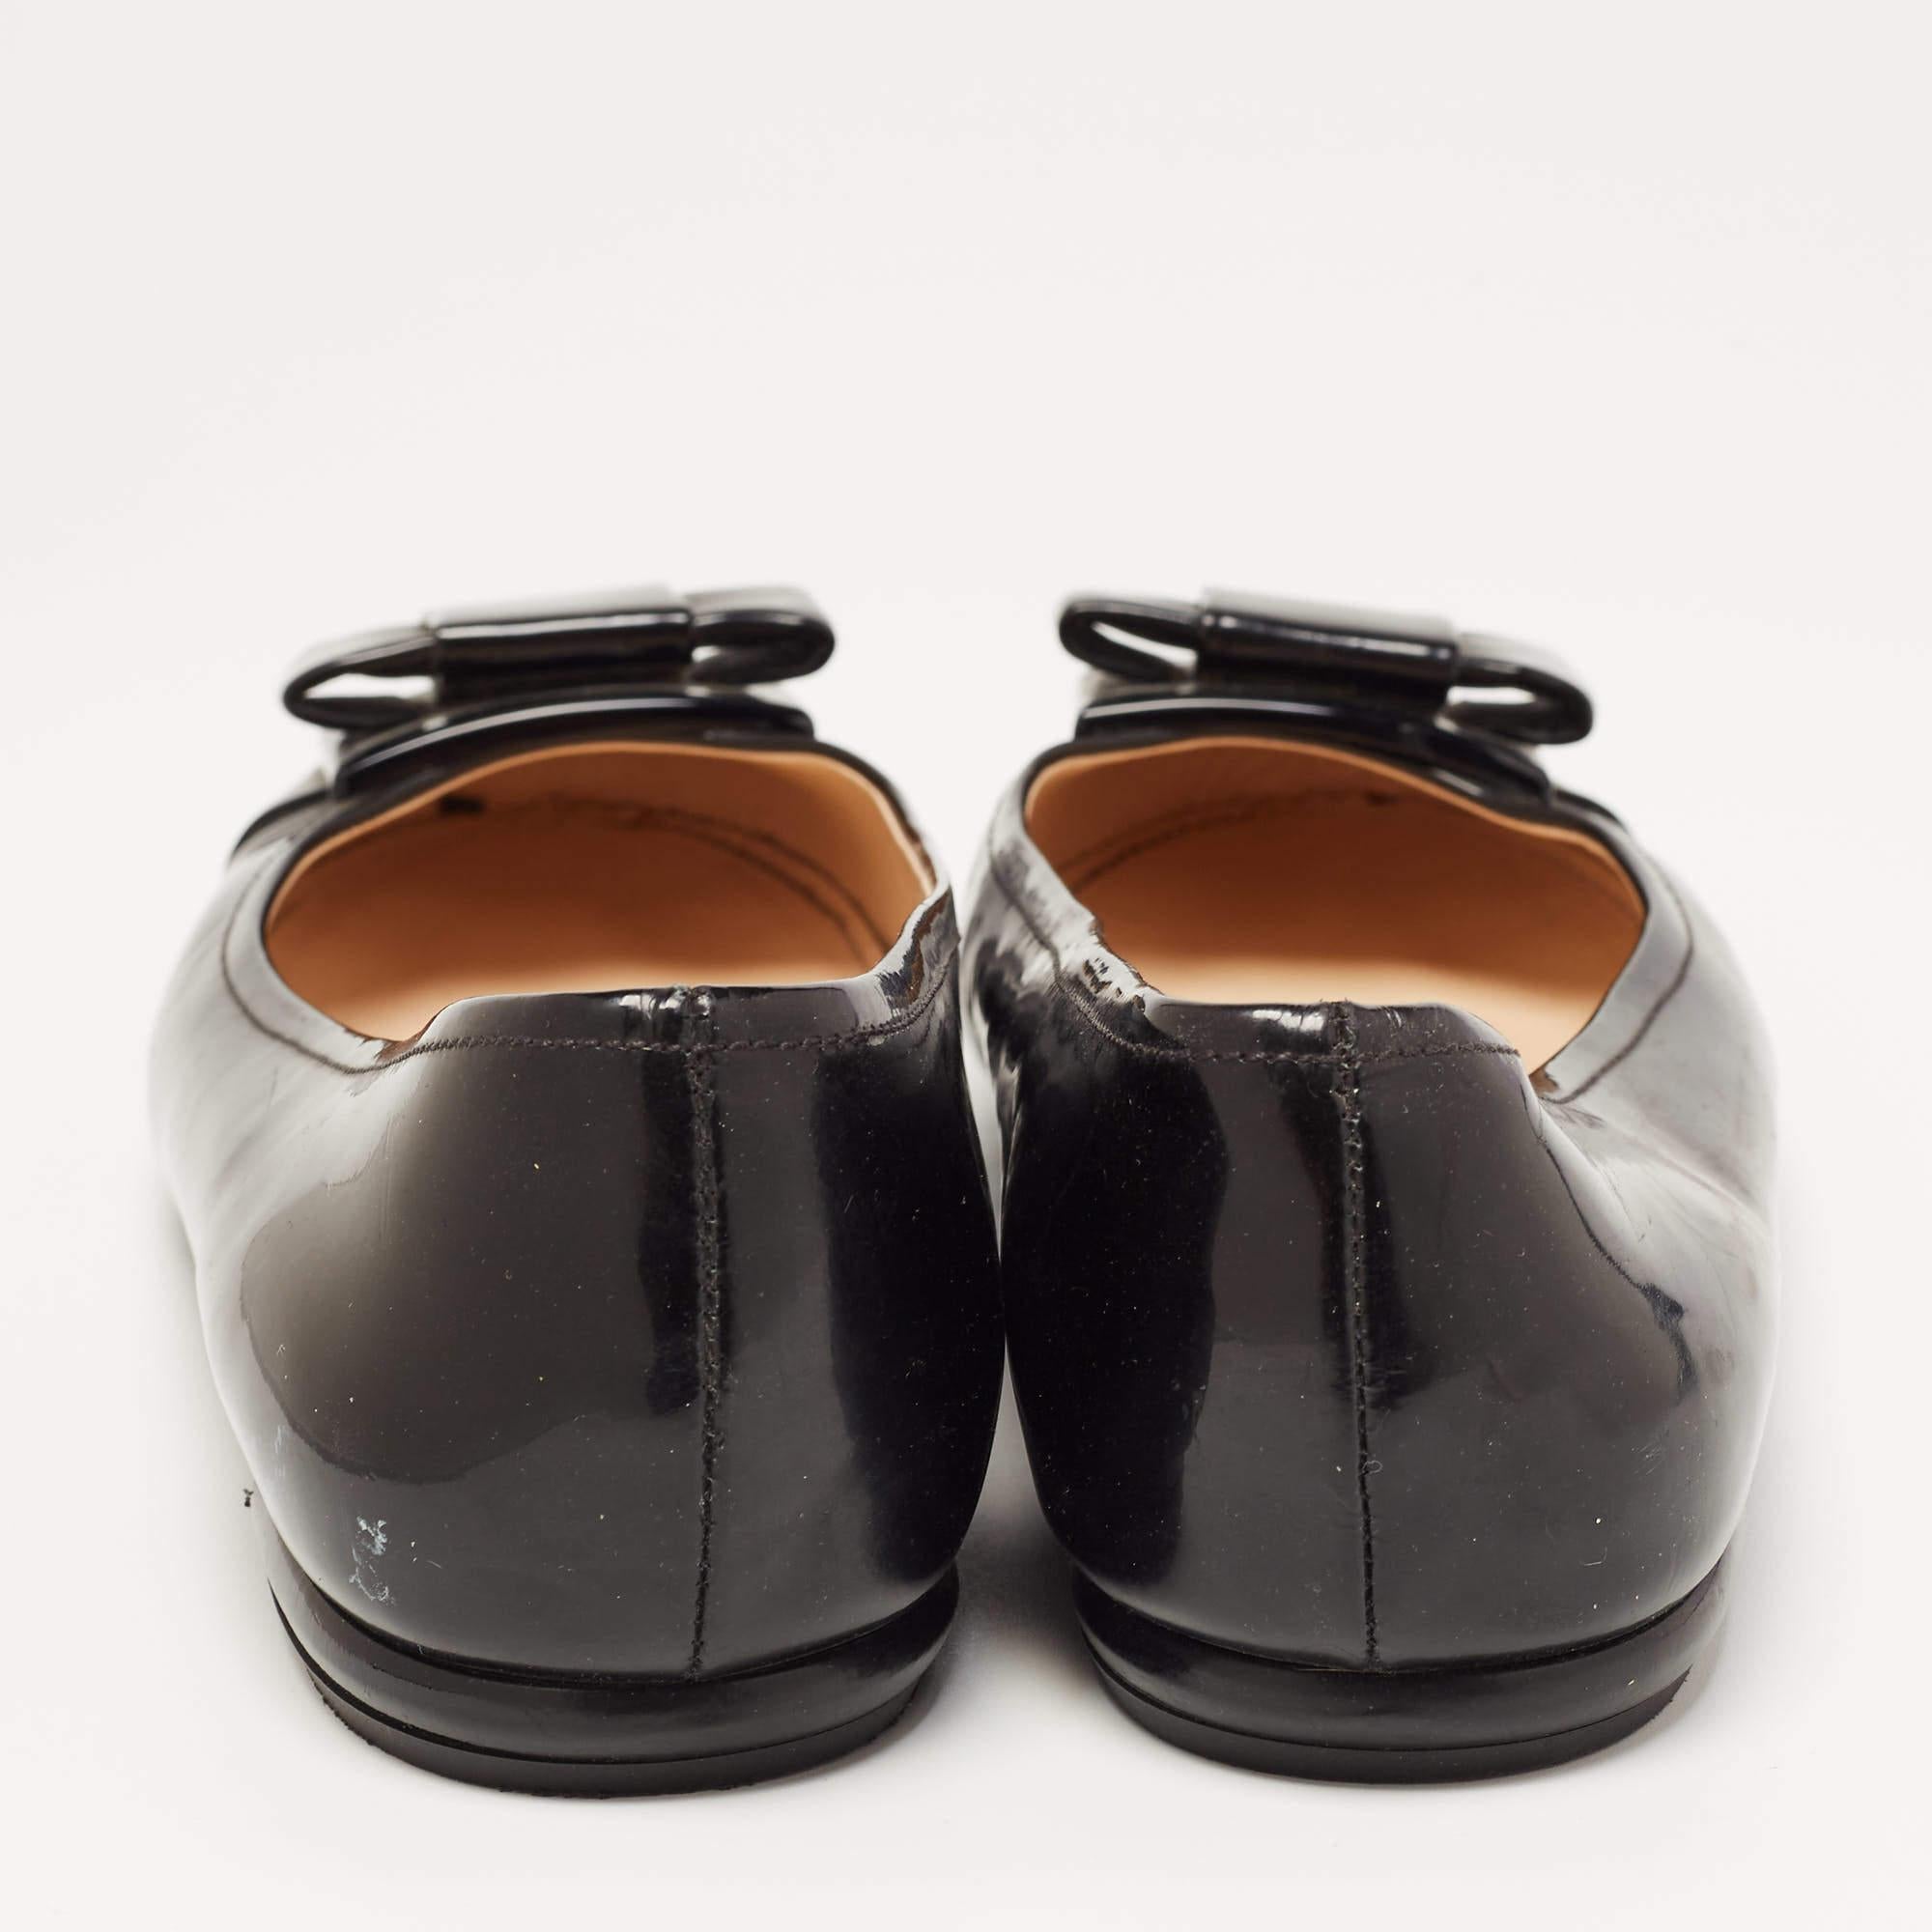 Prada Black Patent Leather Bow Ballet Flats Size 38 3